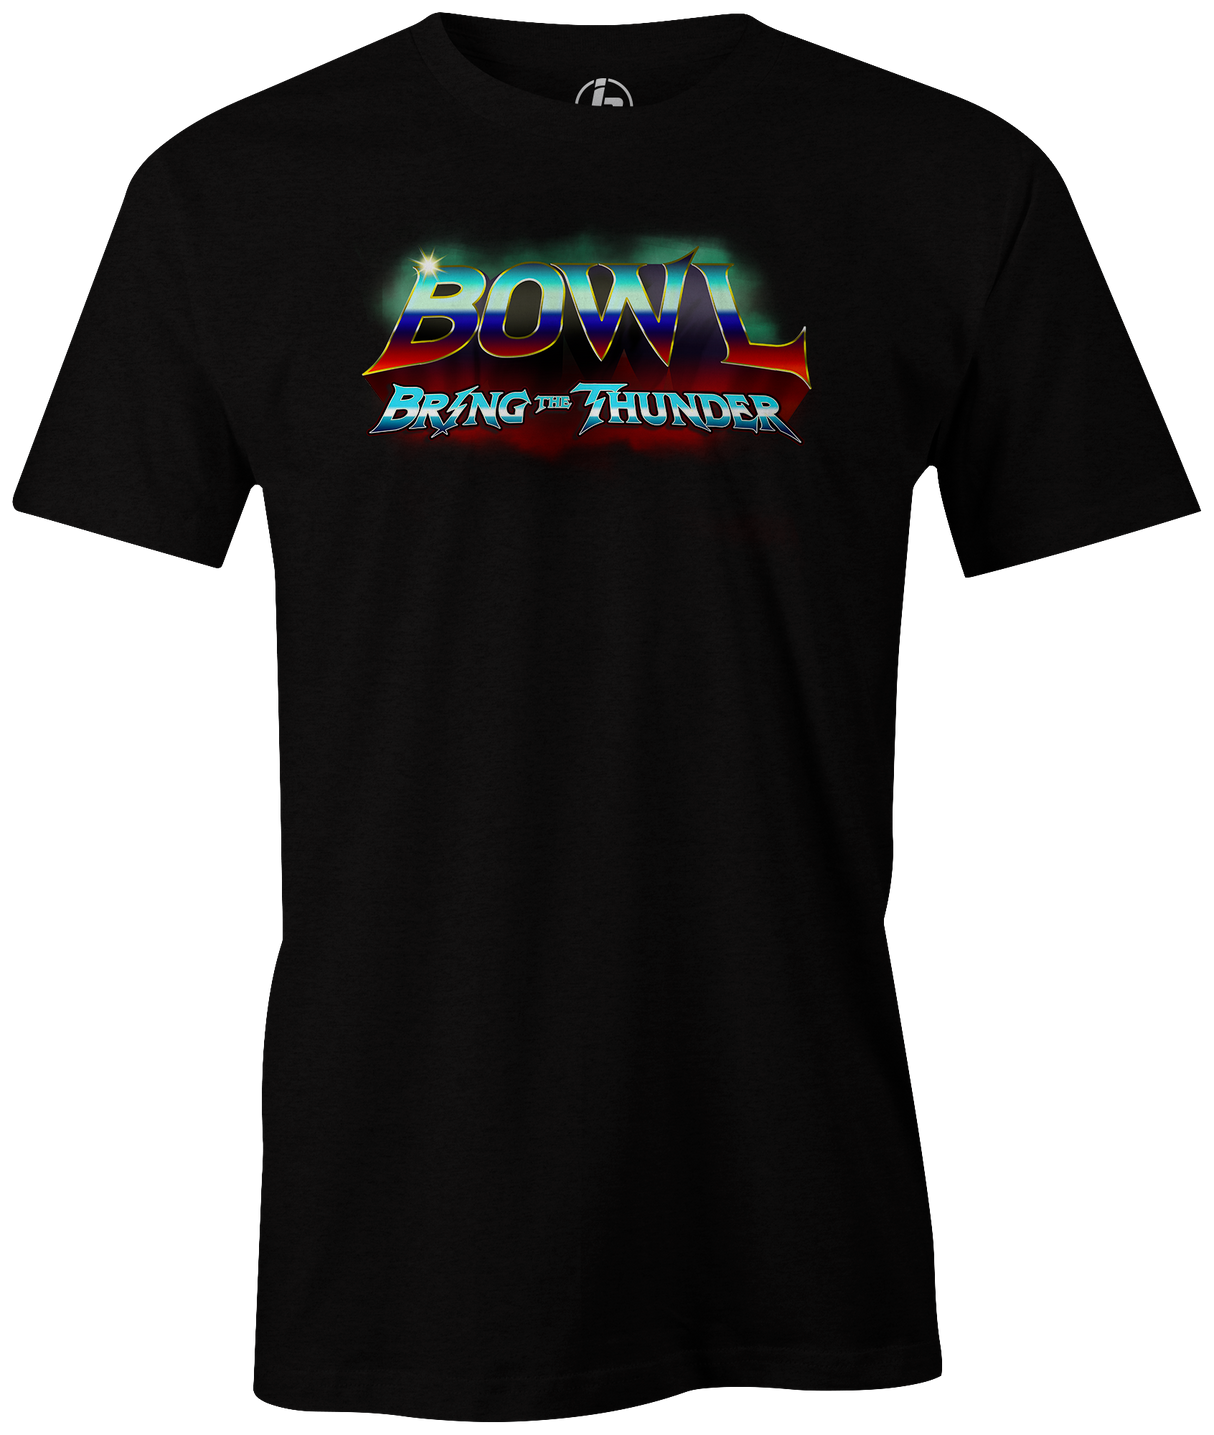 BOWL: Bring The Thunder! thor-bring-the-thunder bowling tee shirt thor guardians of the galaxy avengers movie game tshirt